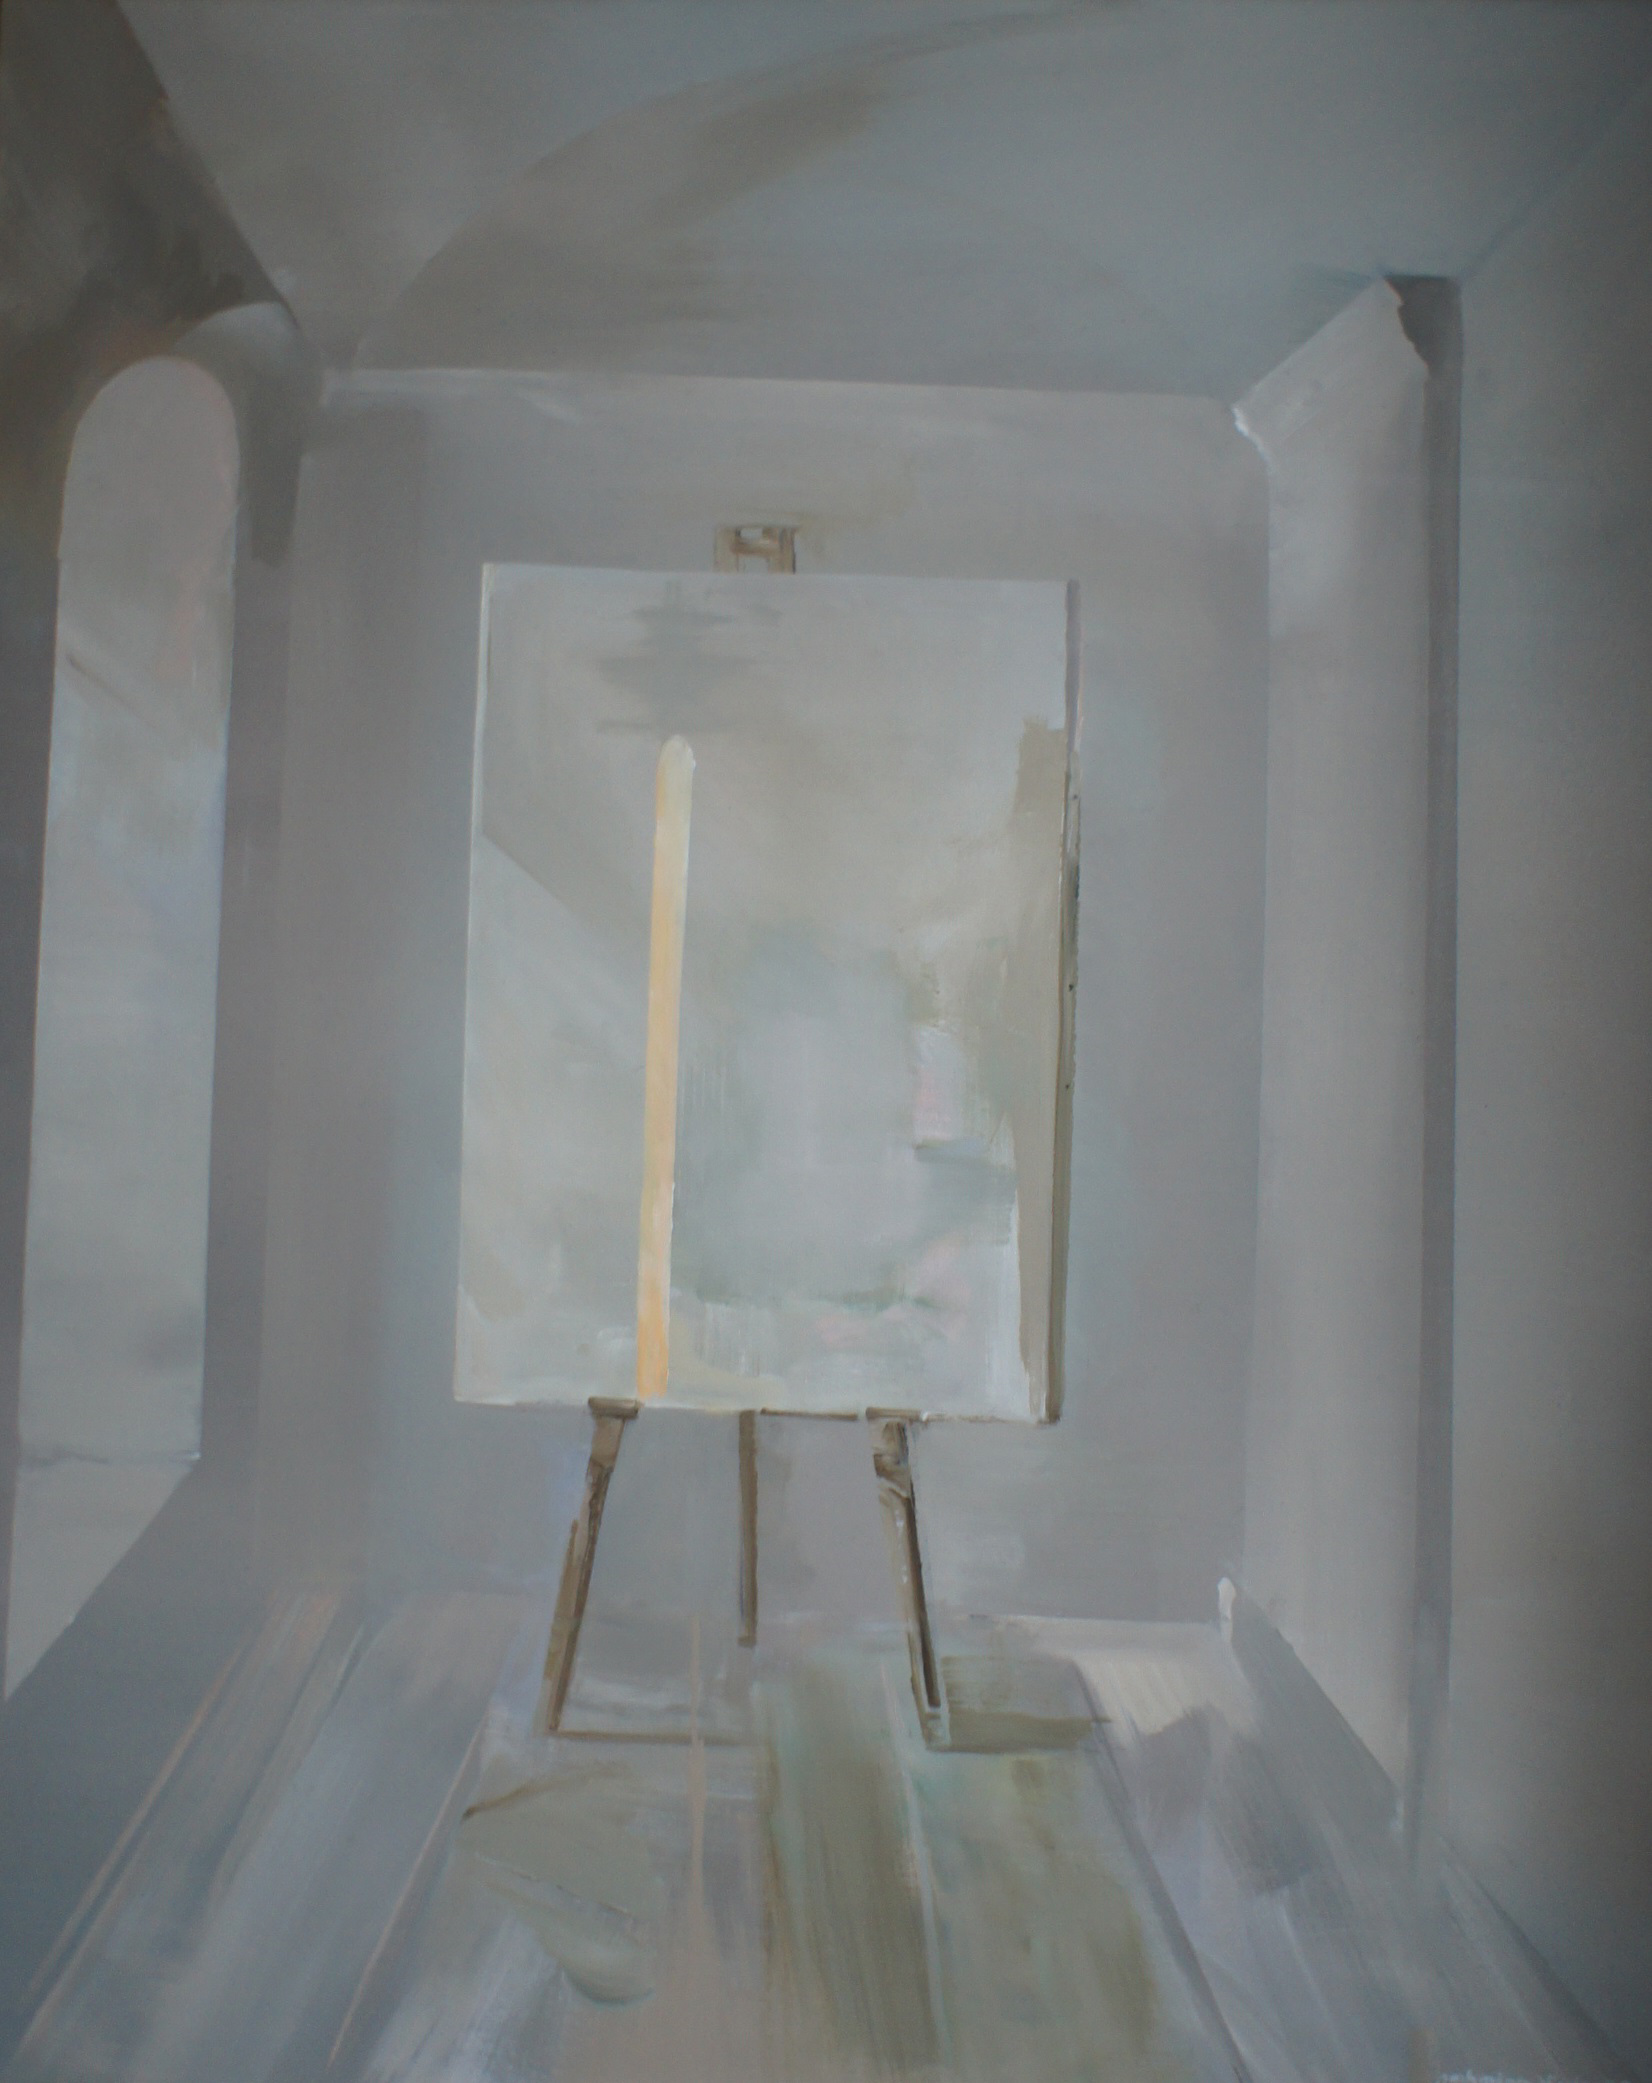 İsimsiz- Untitled, 1998, Tuval üzerine yağlıboya- Oil on canvas, 116X96 cm